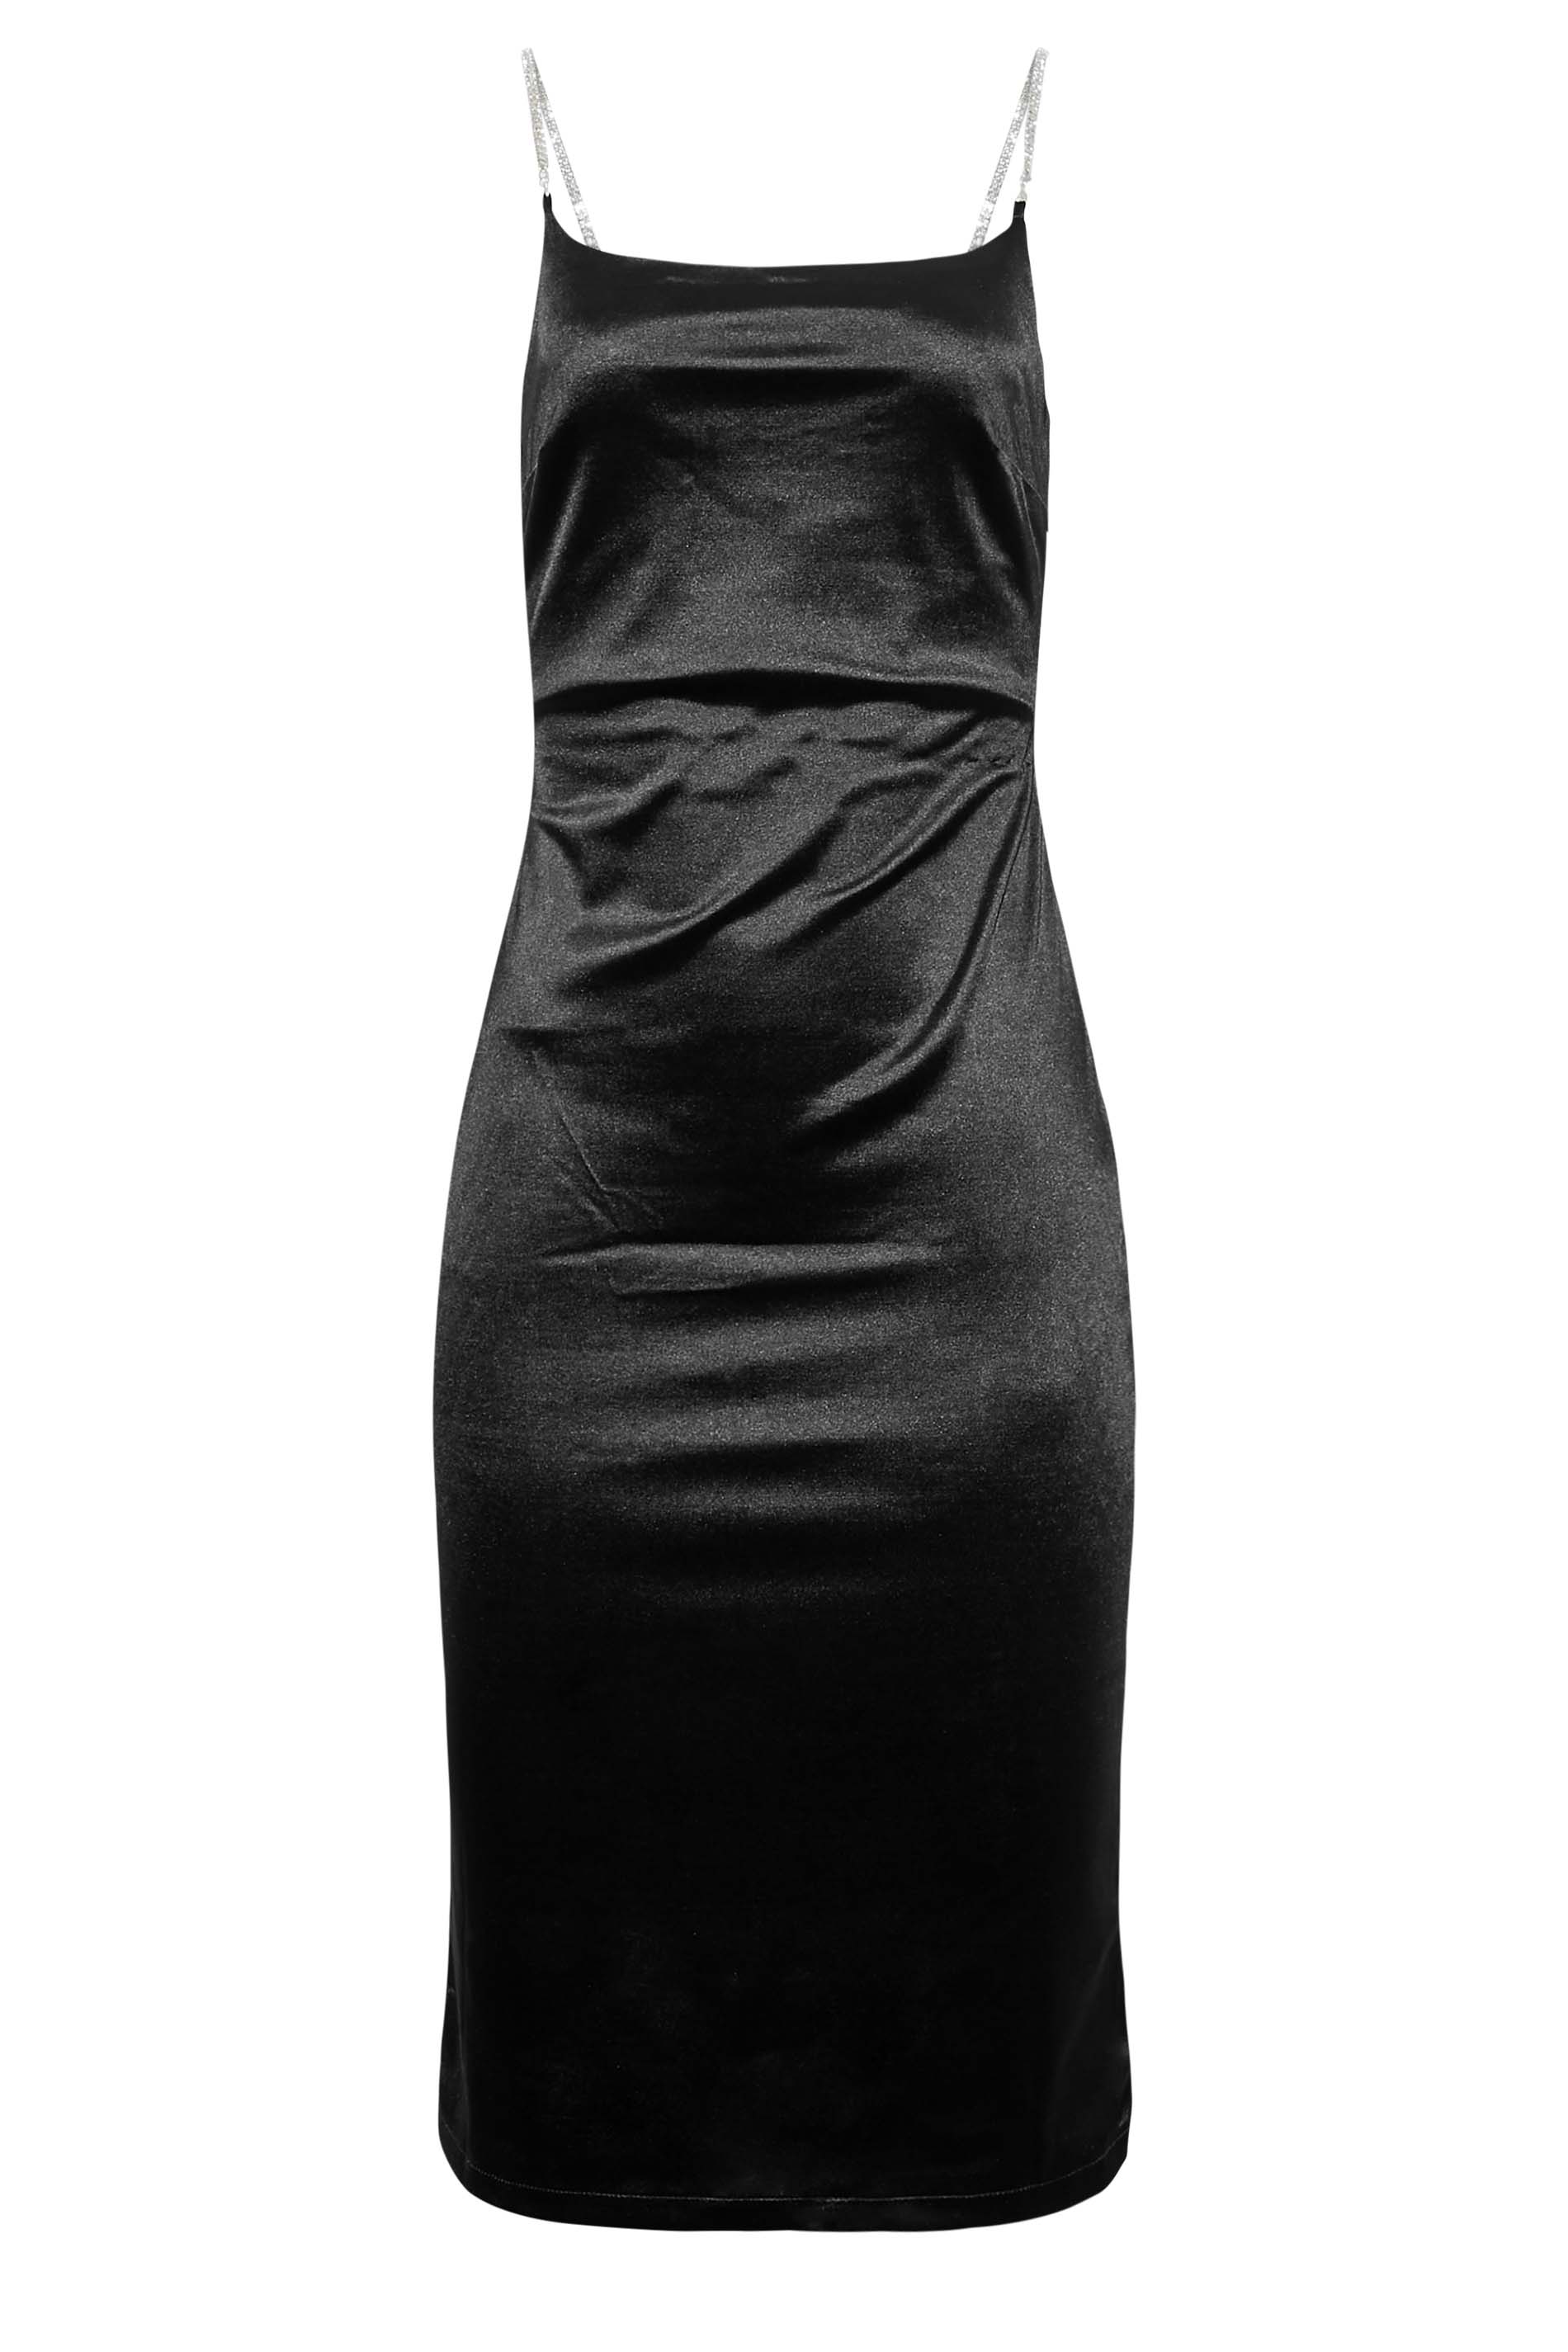 LTS Tall Black Diamante Strap Satin Mini Slip Dress | Long Tall Sally  2